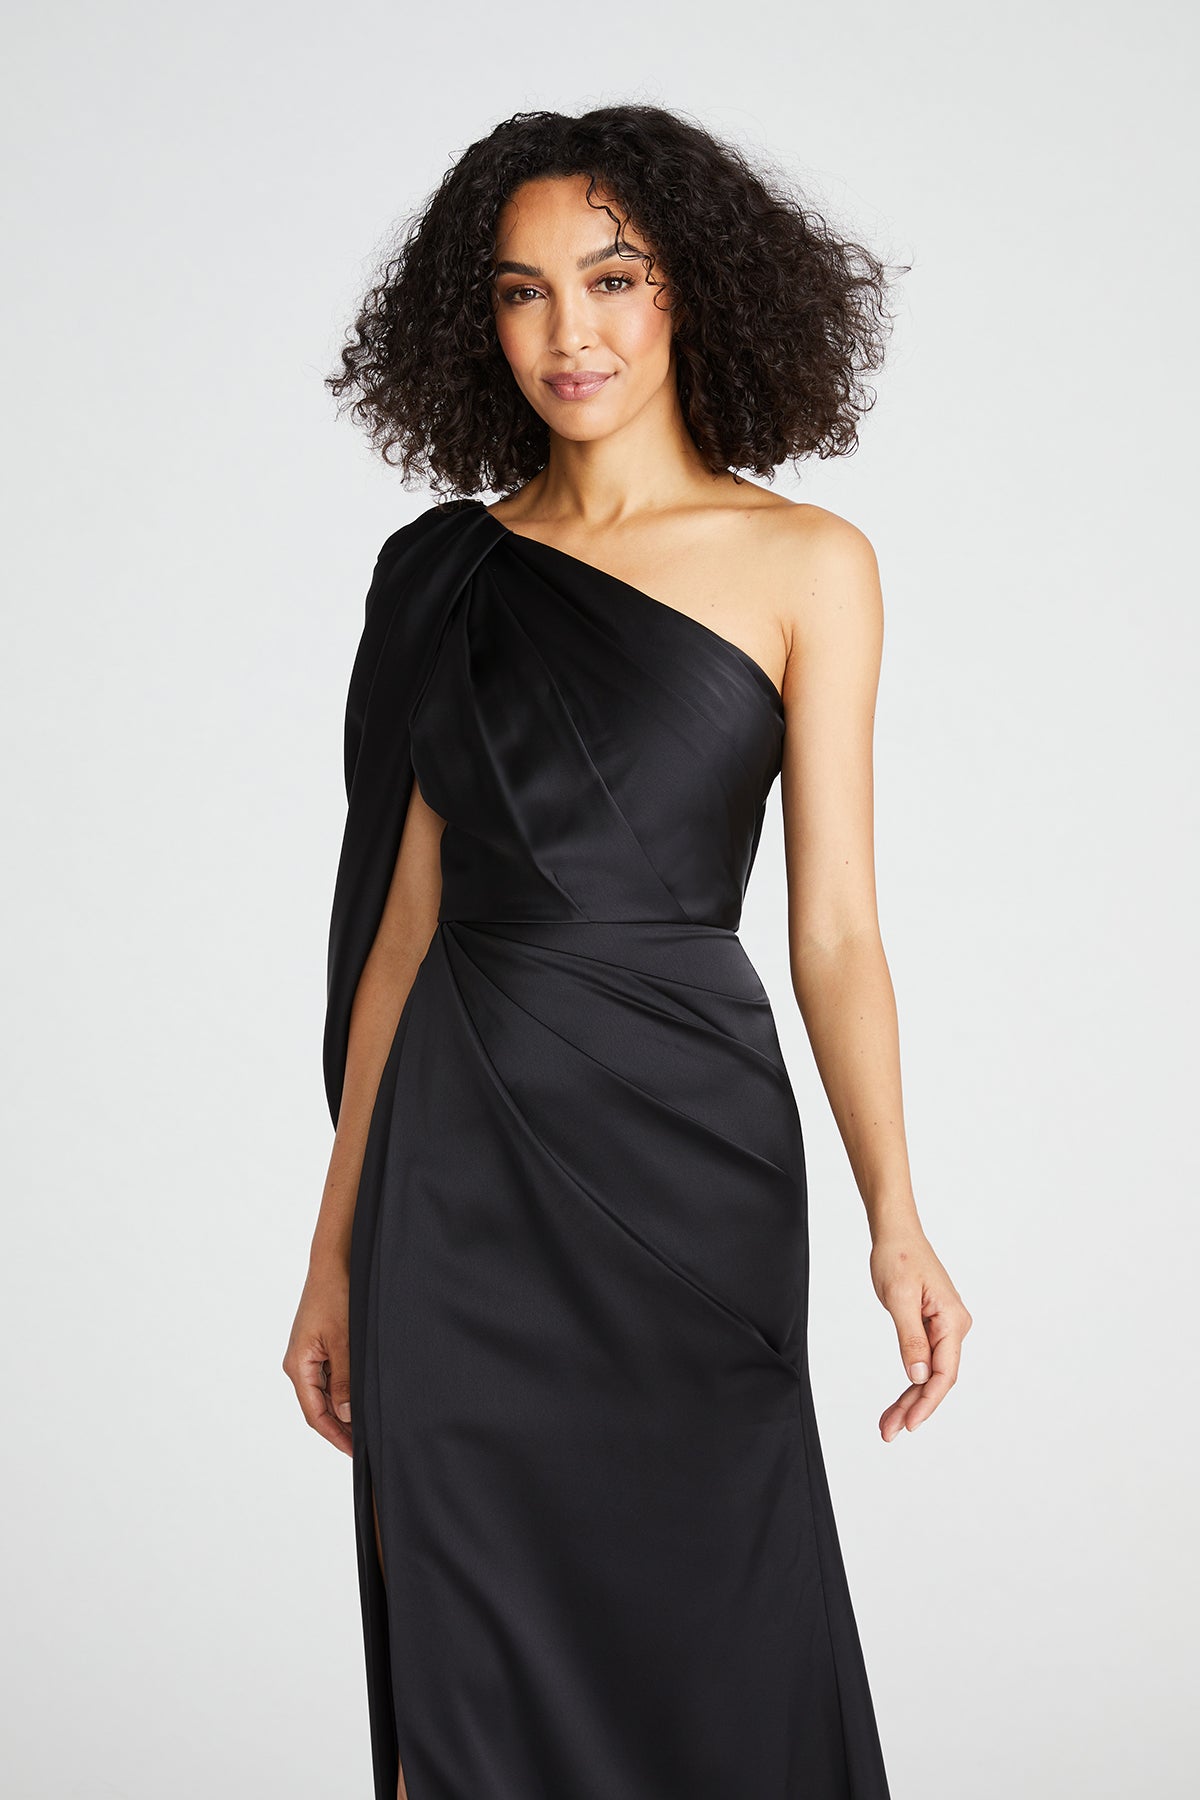 Topshop one shoulder sequin midi dress in black | ASOS